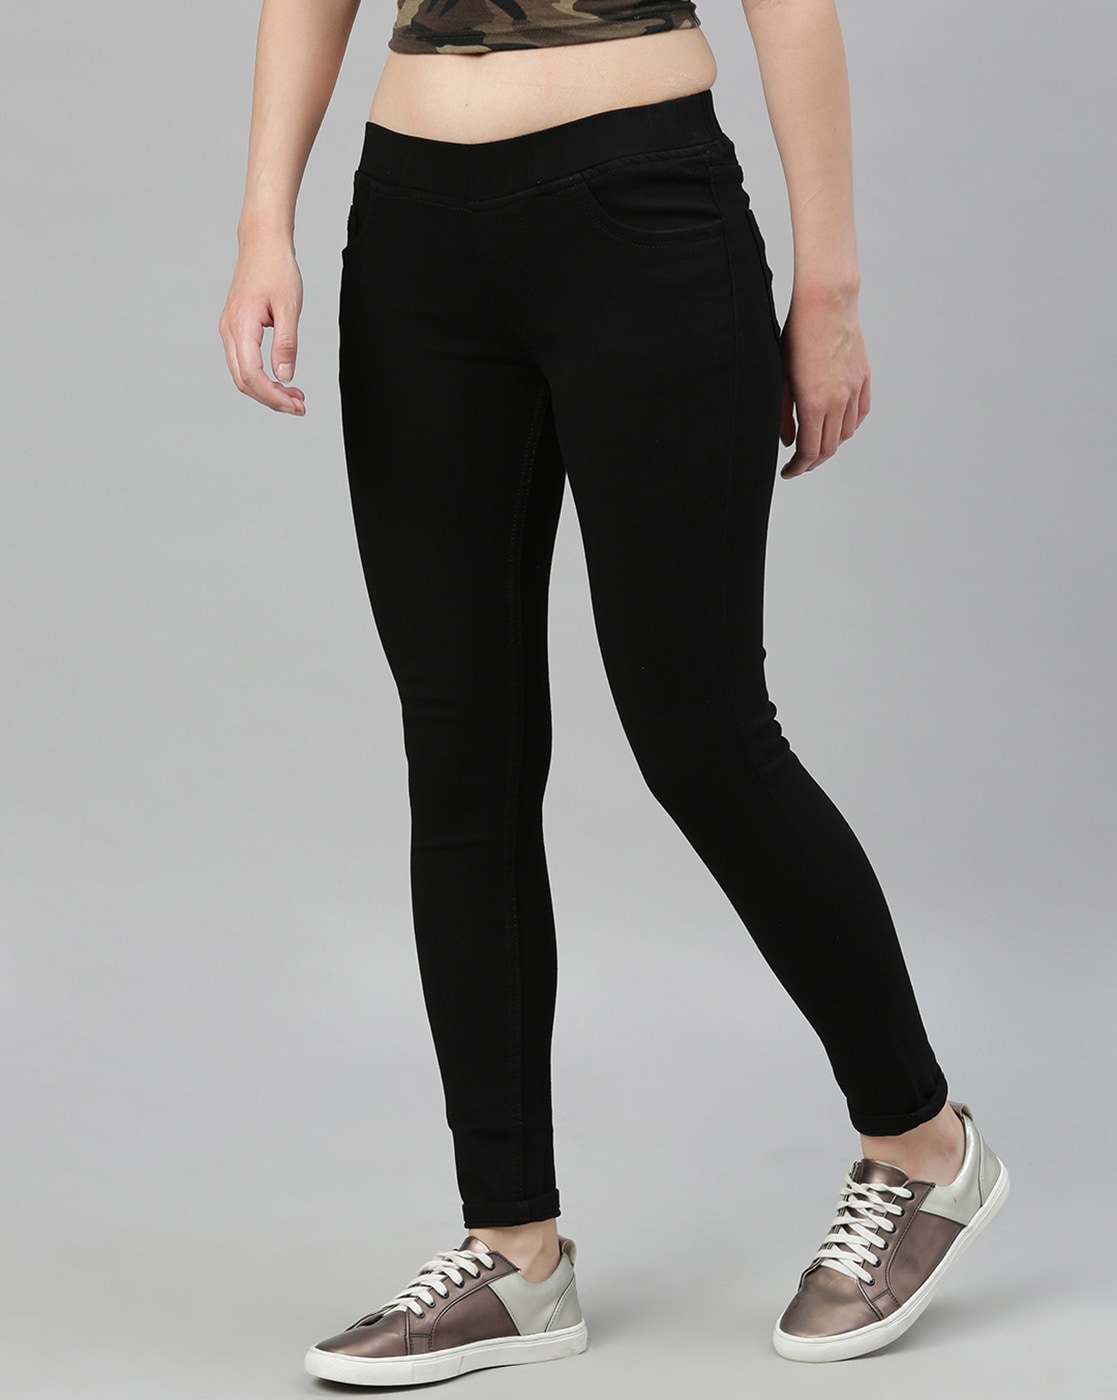 Buy Black Jeans & Jeggings for Women by ADBUCKS Online | Ajio.com